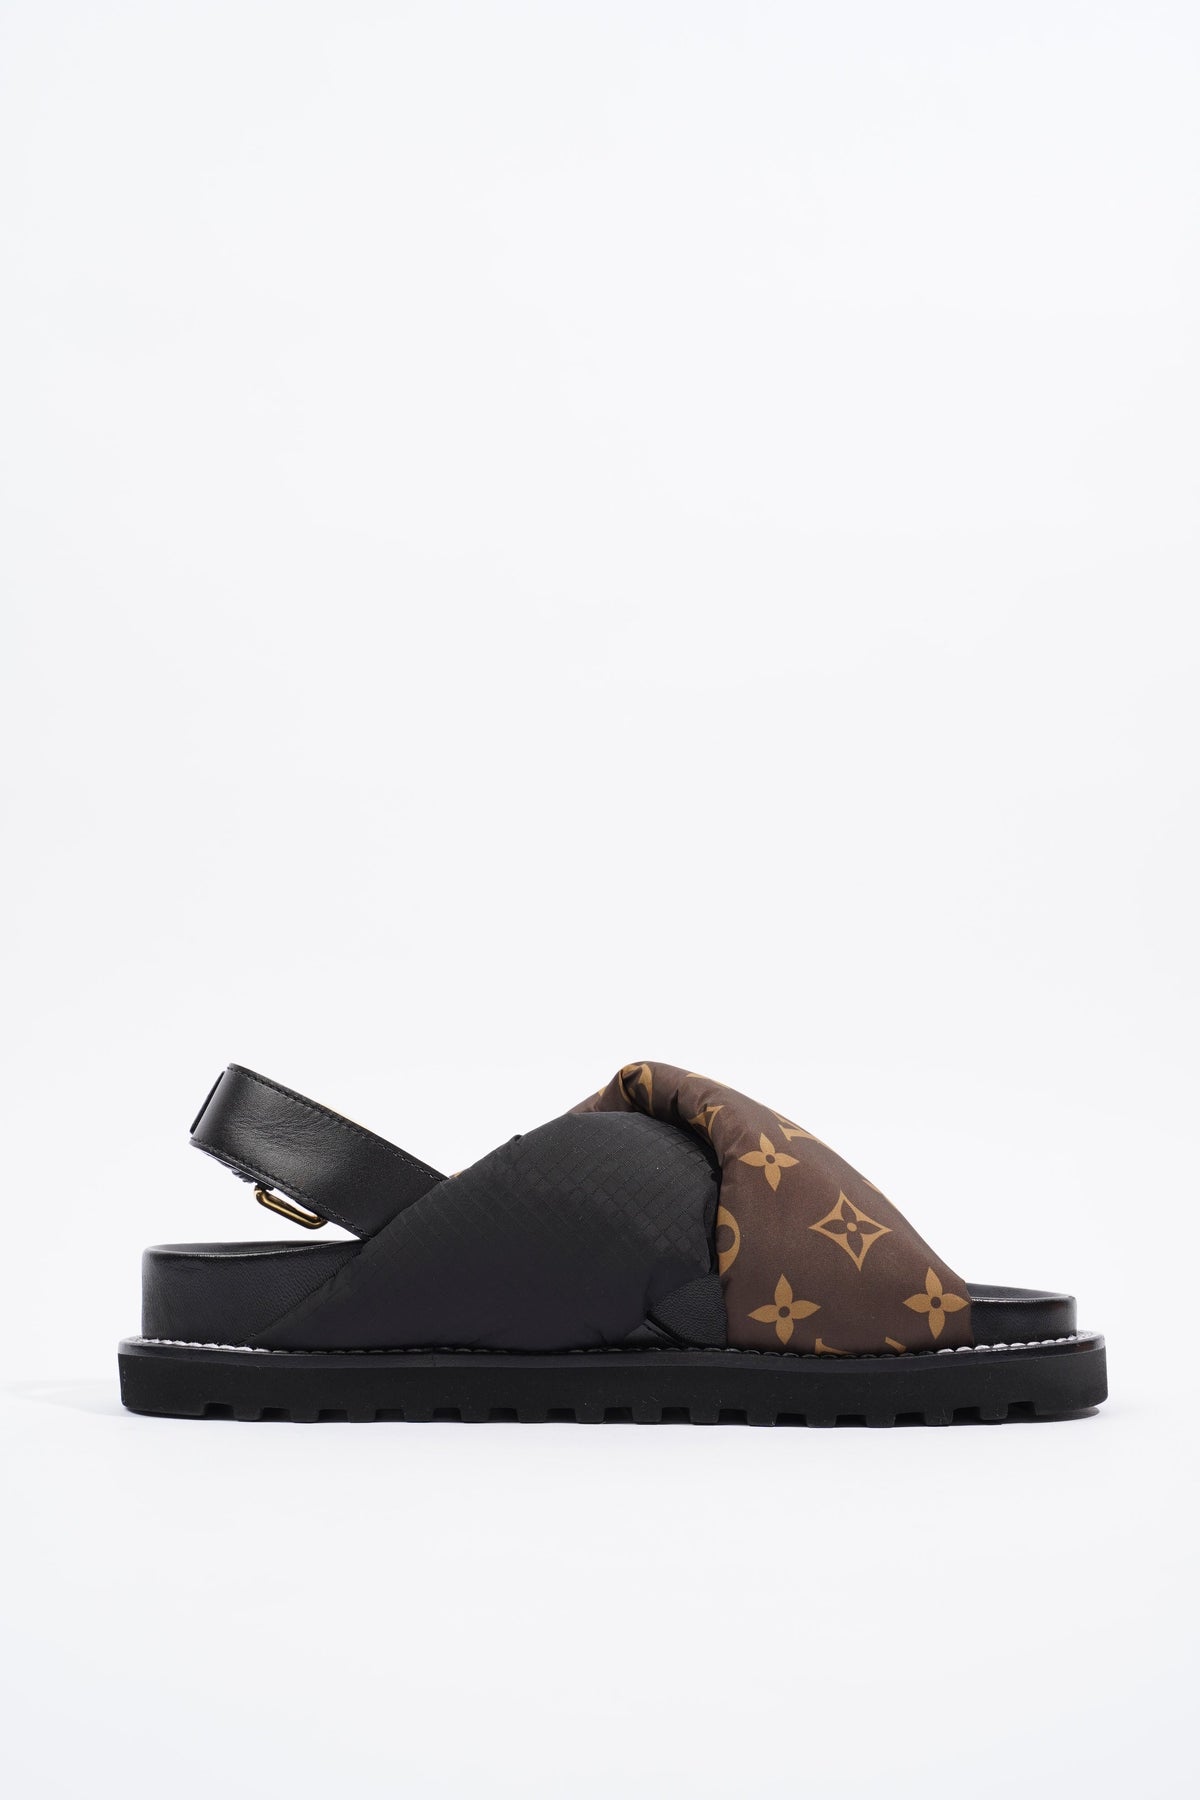 Louis Vuitton Womens Paseo Flat Comfort Sandal Monogram / Black EU